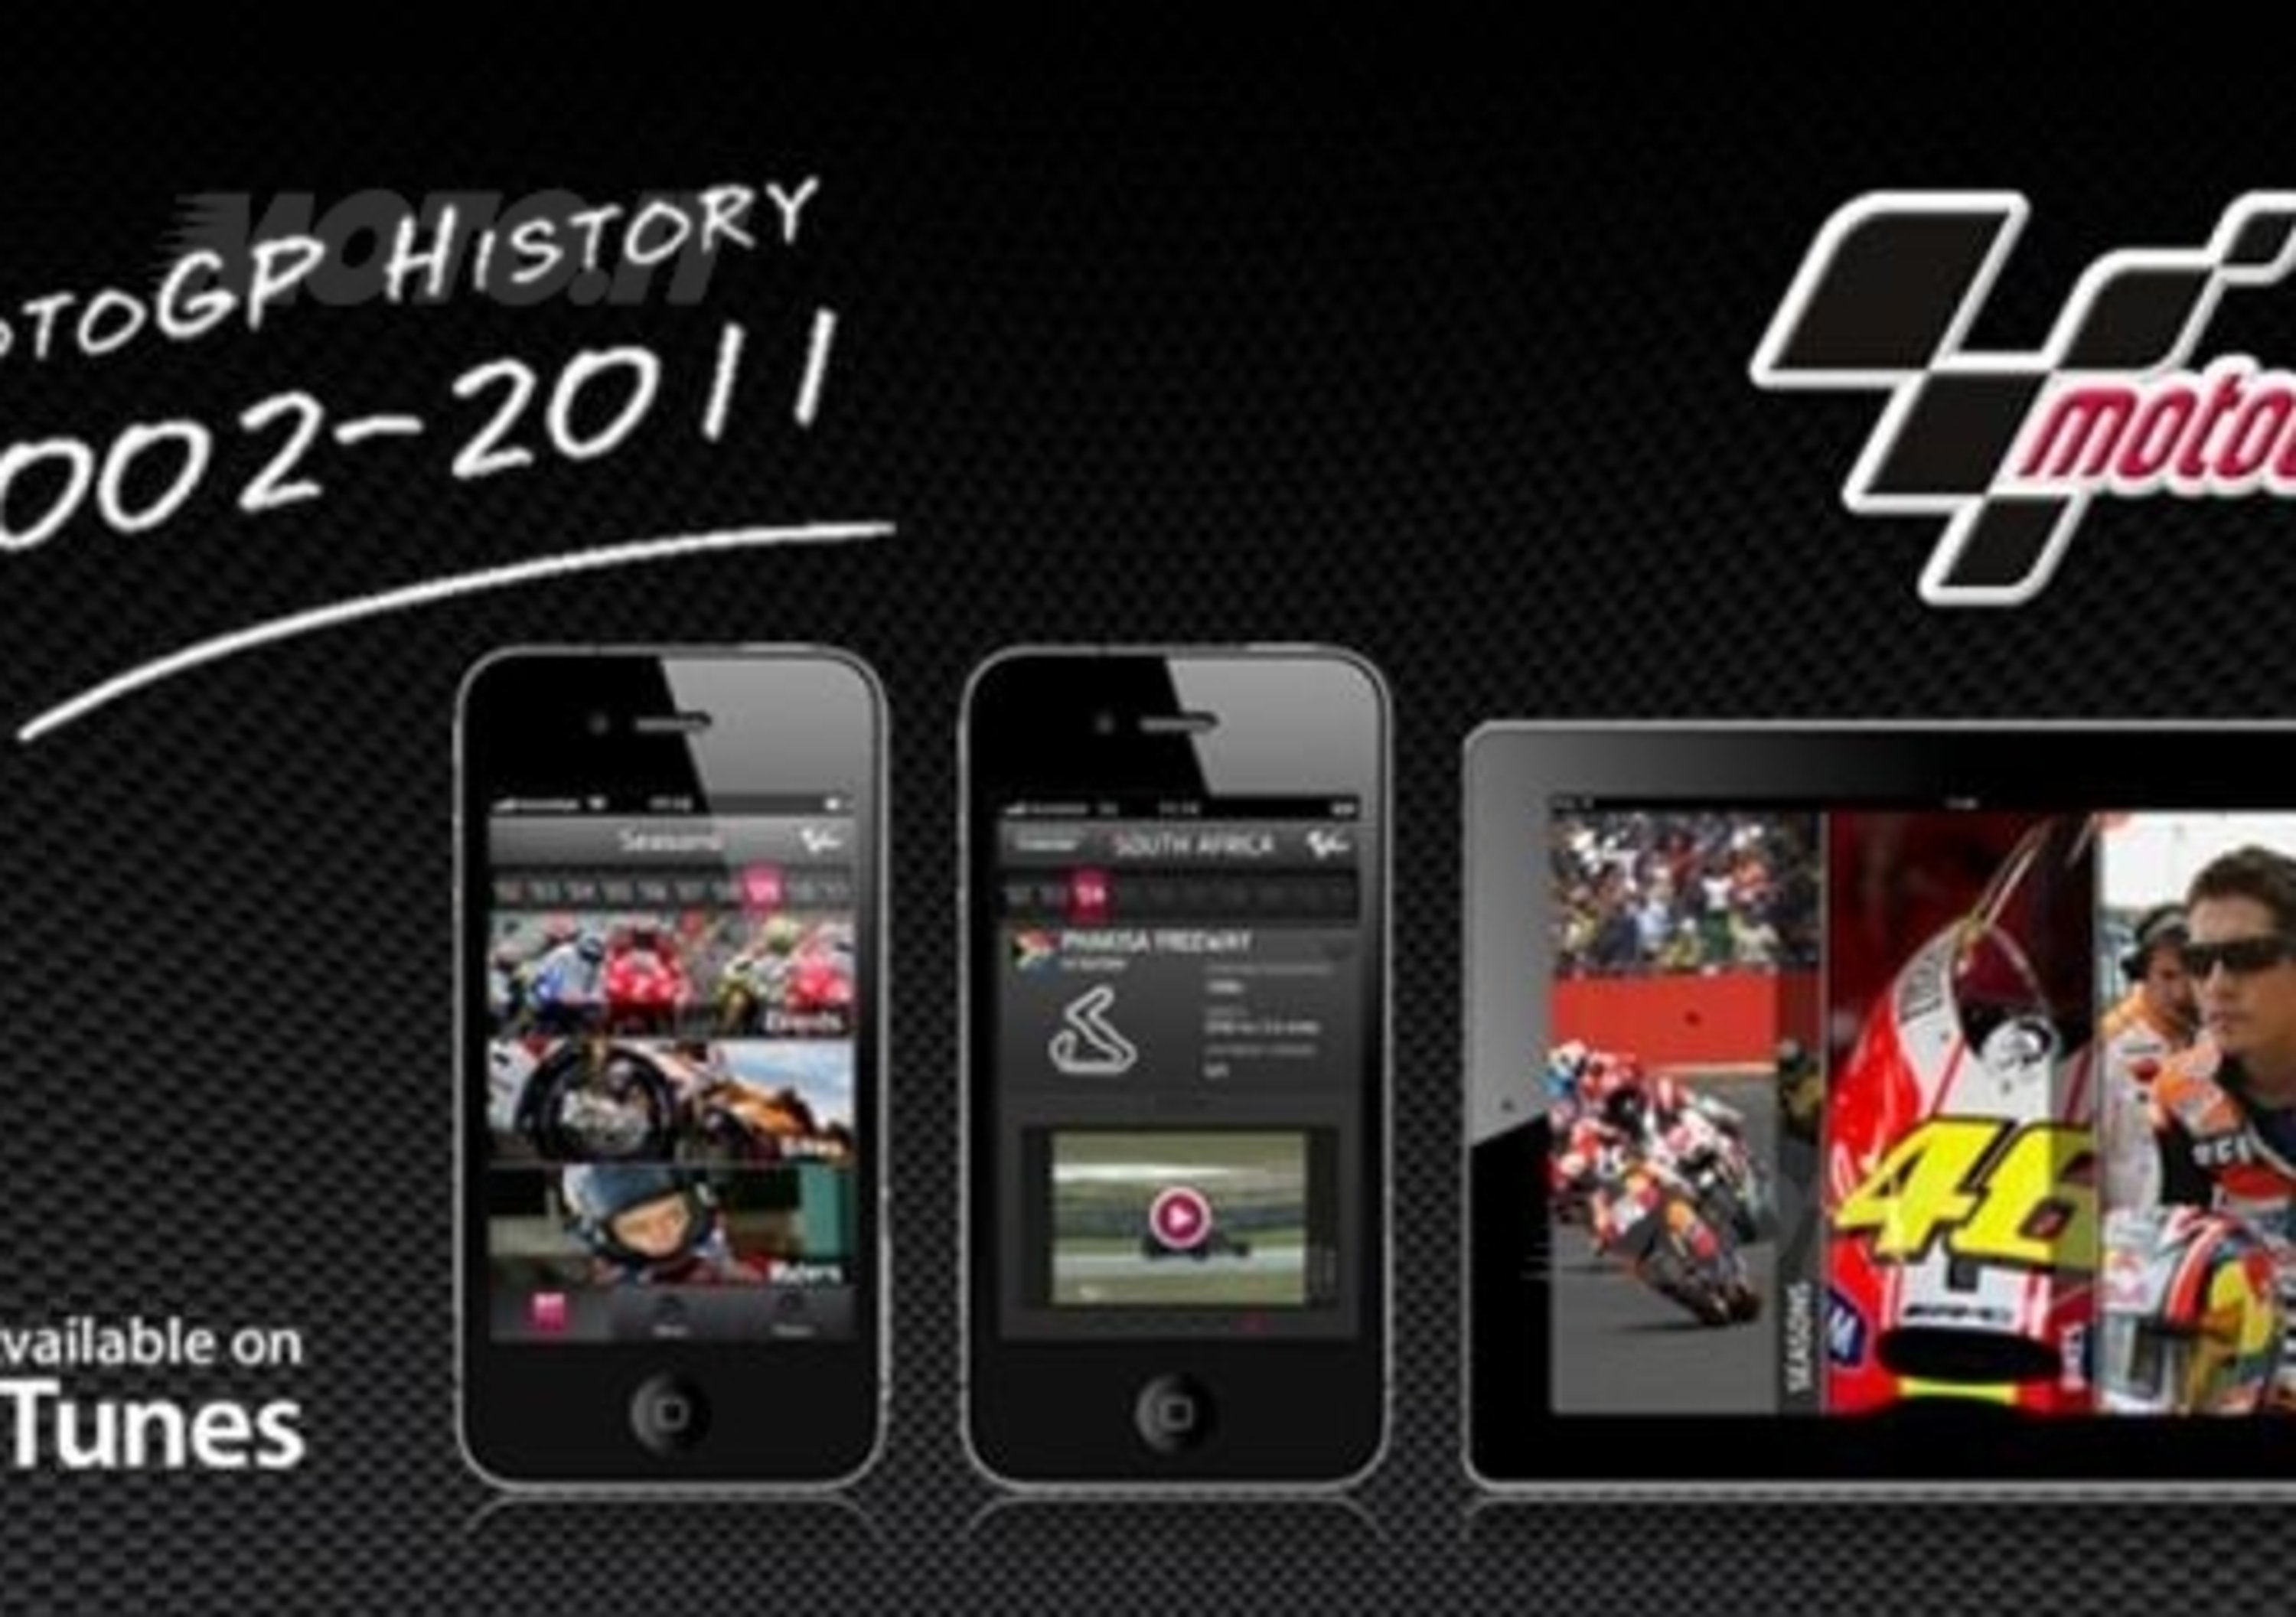 MotoGP History app disponibile per iPhone, iPod Touch e iPad